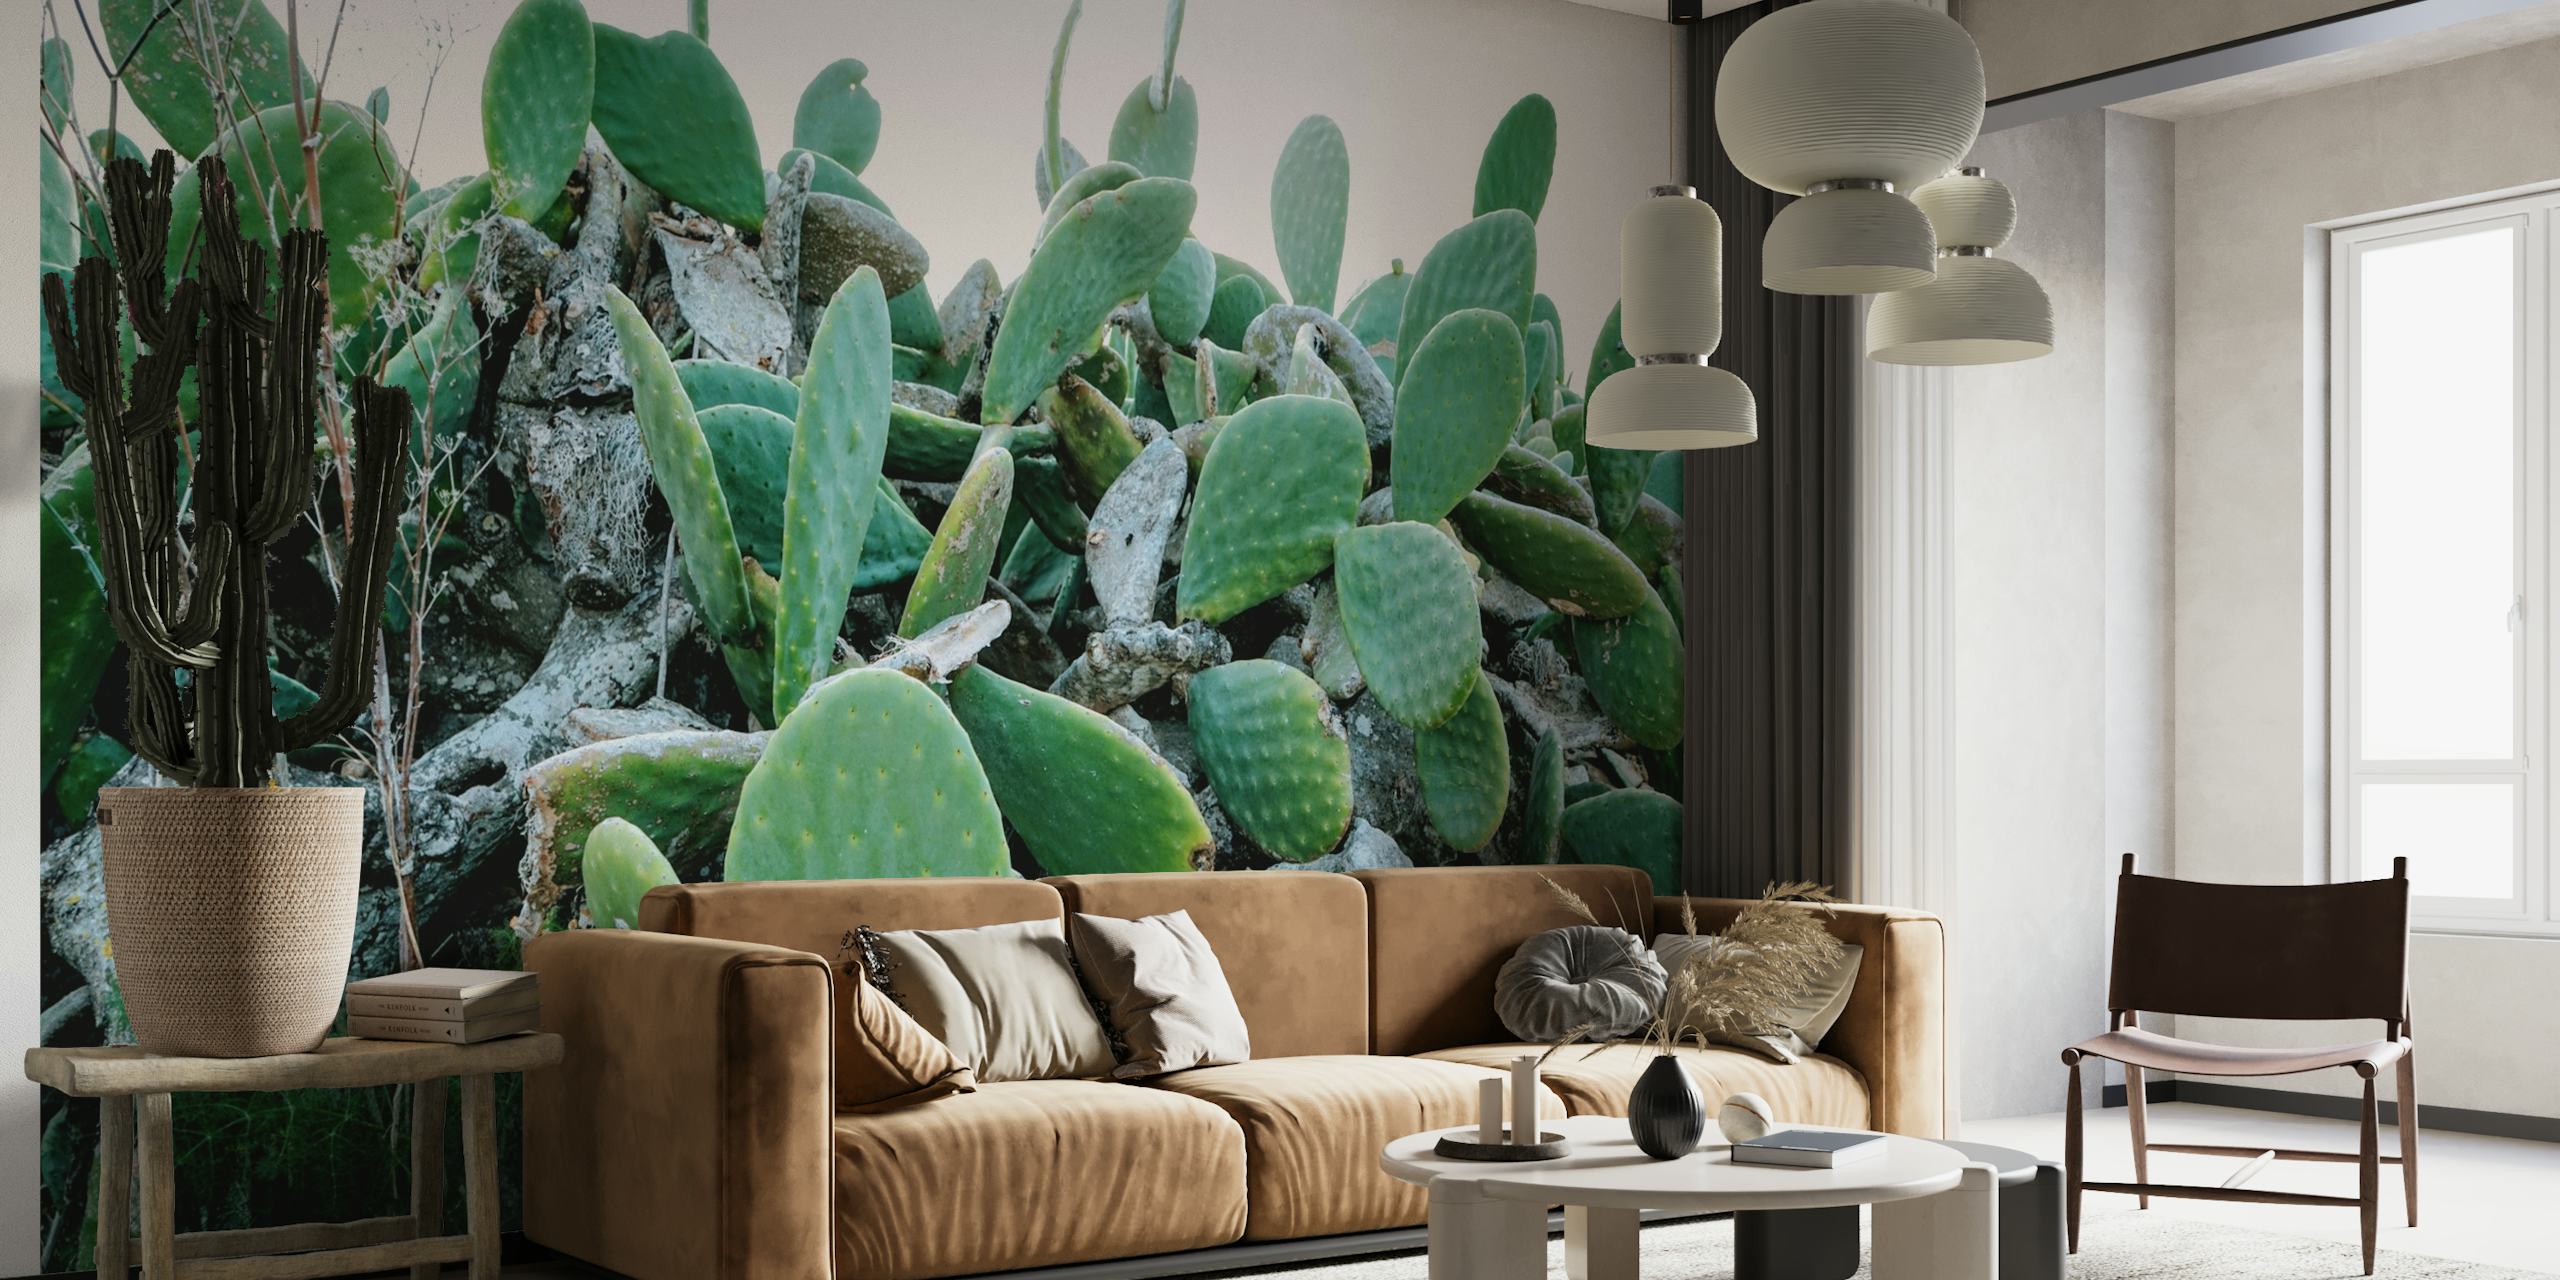 Fototapeta Cactus Gardens s živým shlukem kaktusů